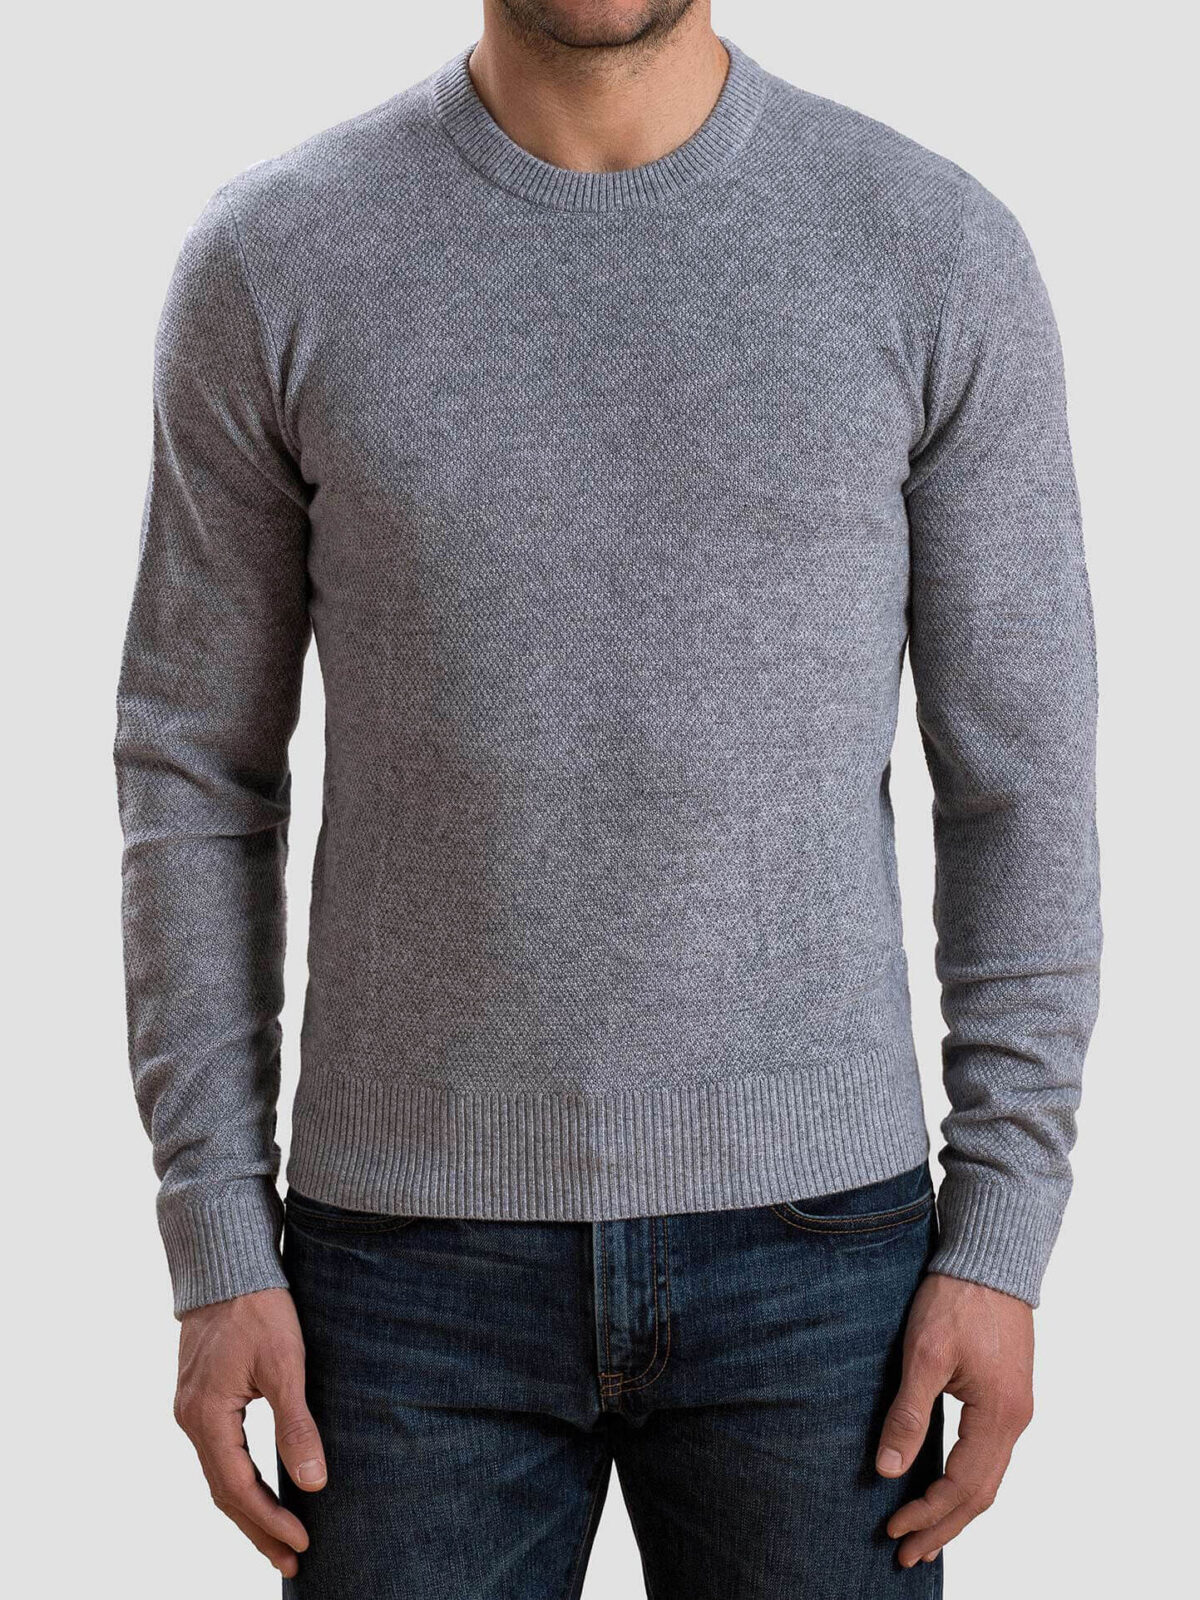 Light Grey Cobble Stitch Cashmere Crewneck Sweater